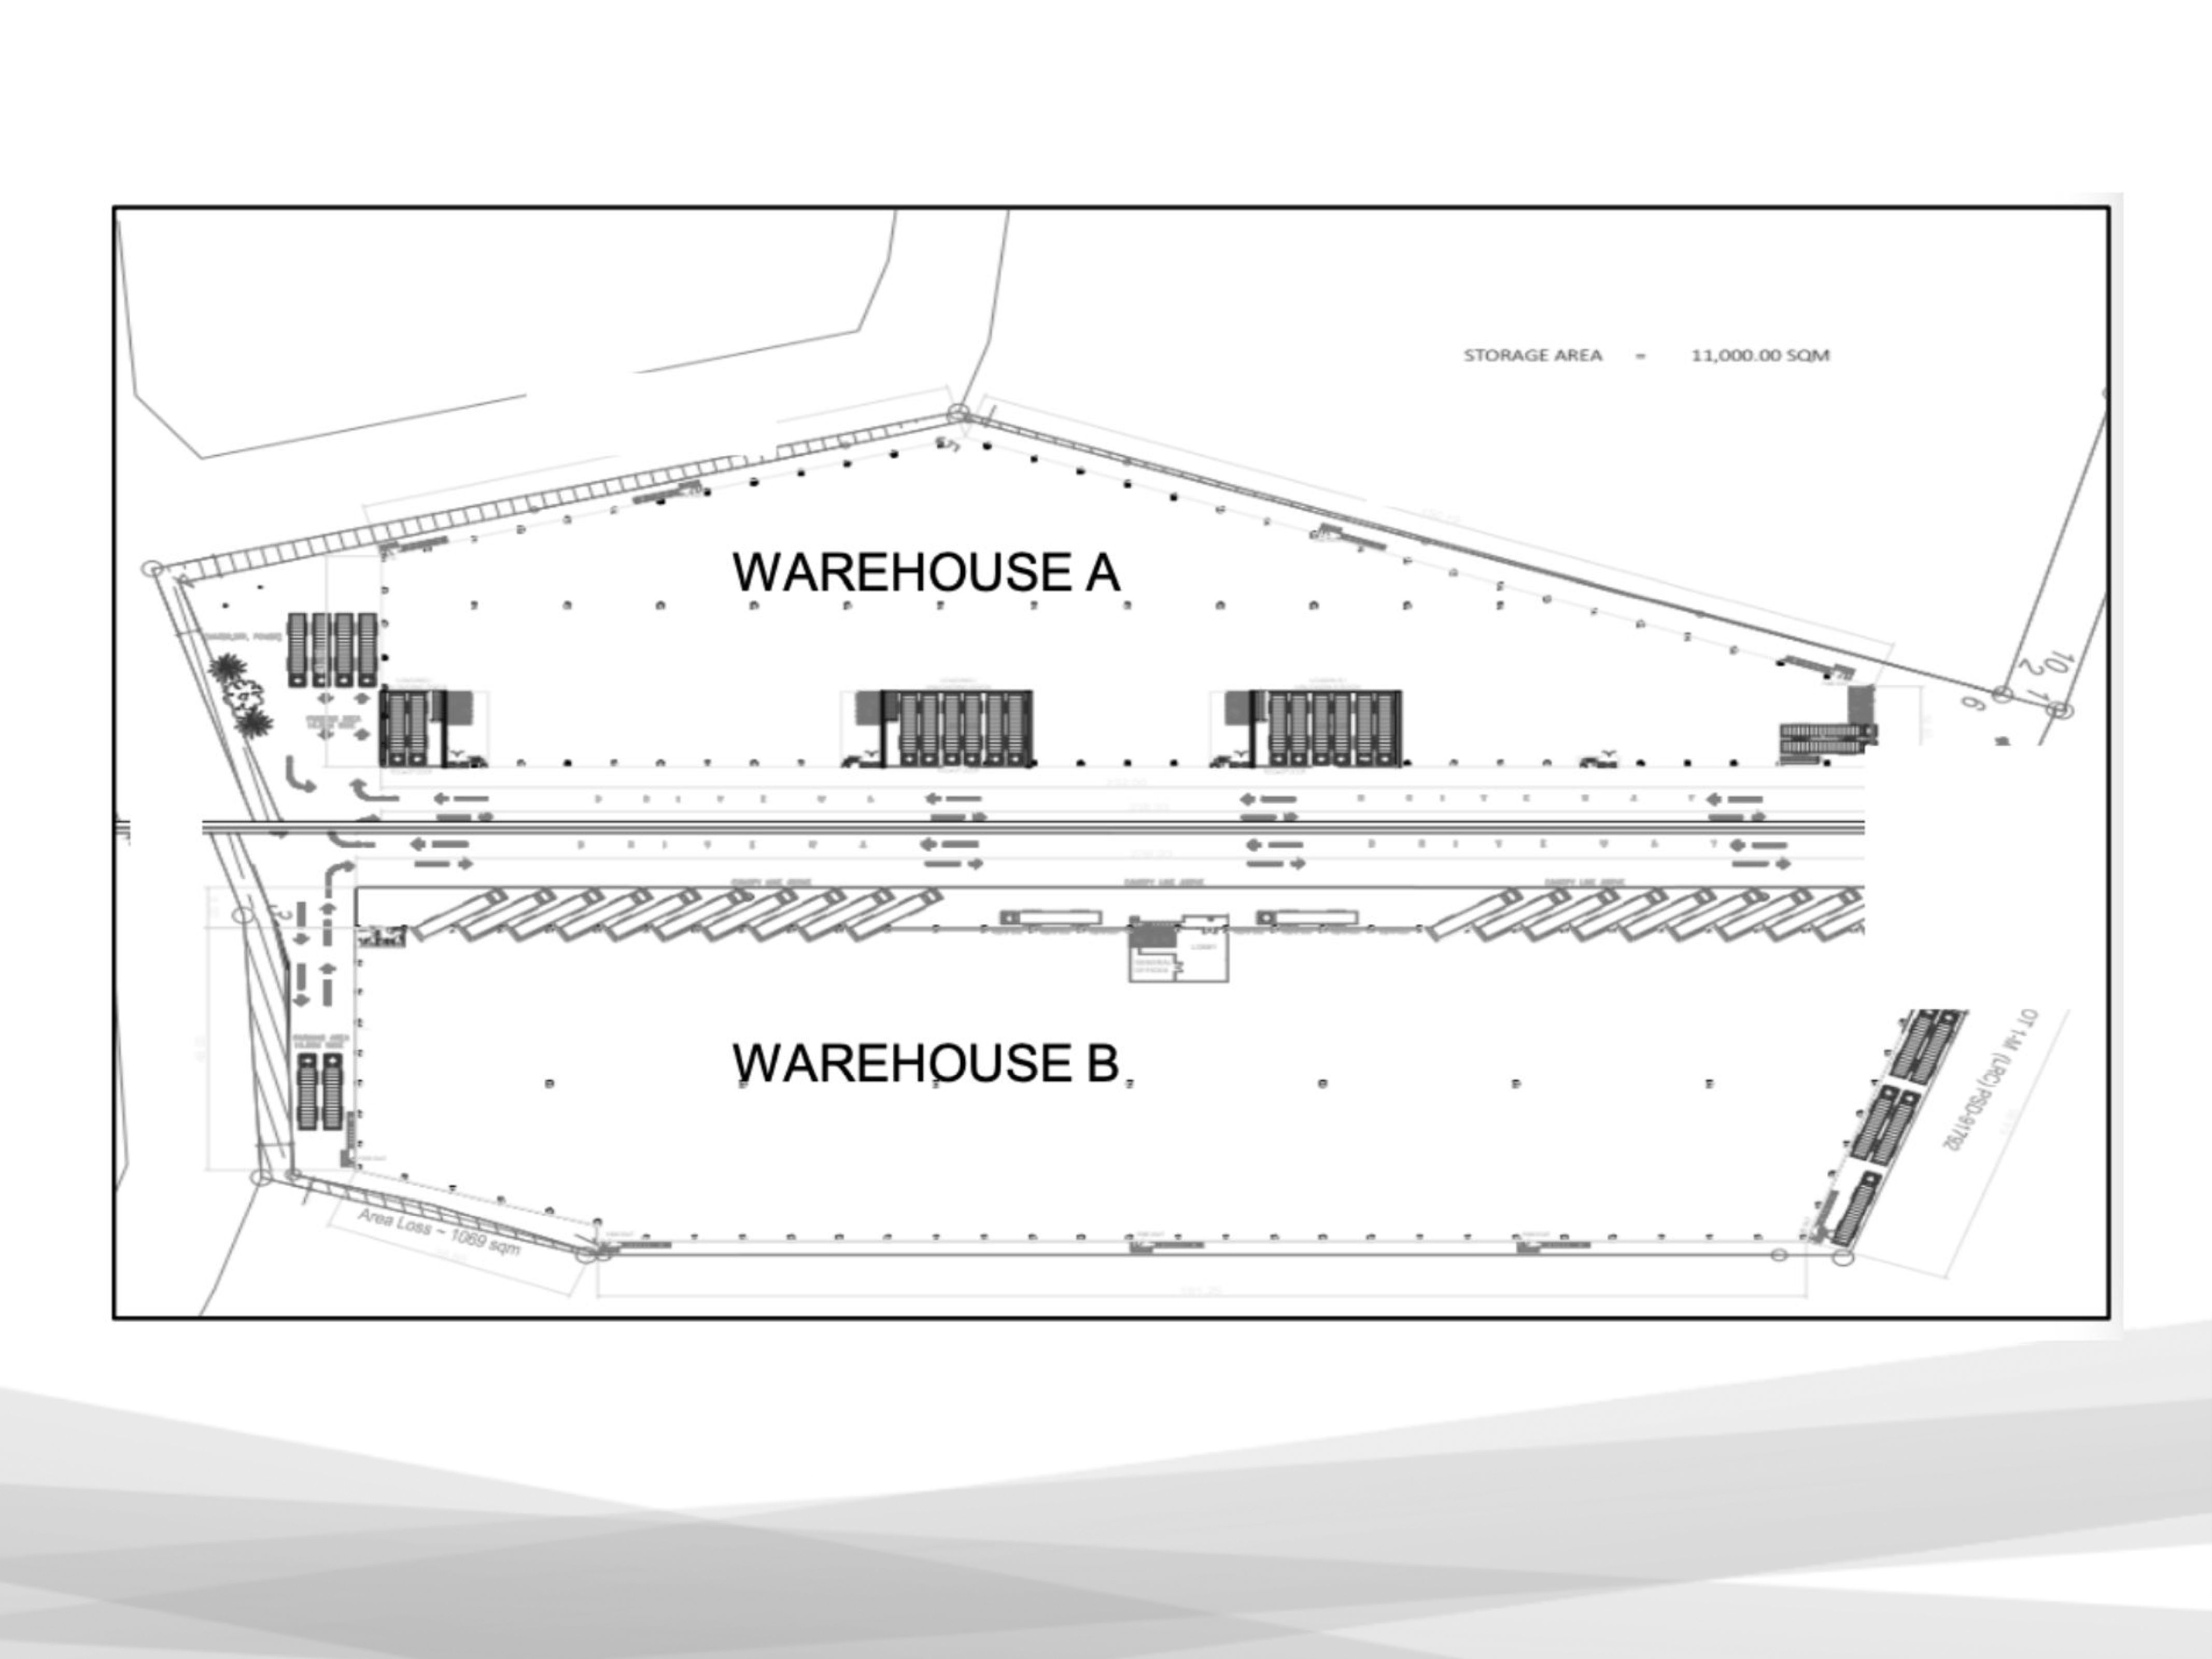 19600-sqm-warehouse-with-loading-docks-in-cabuyao-laguna